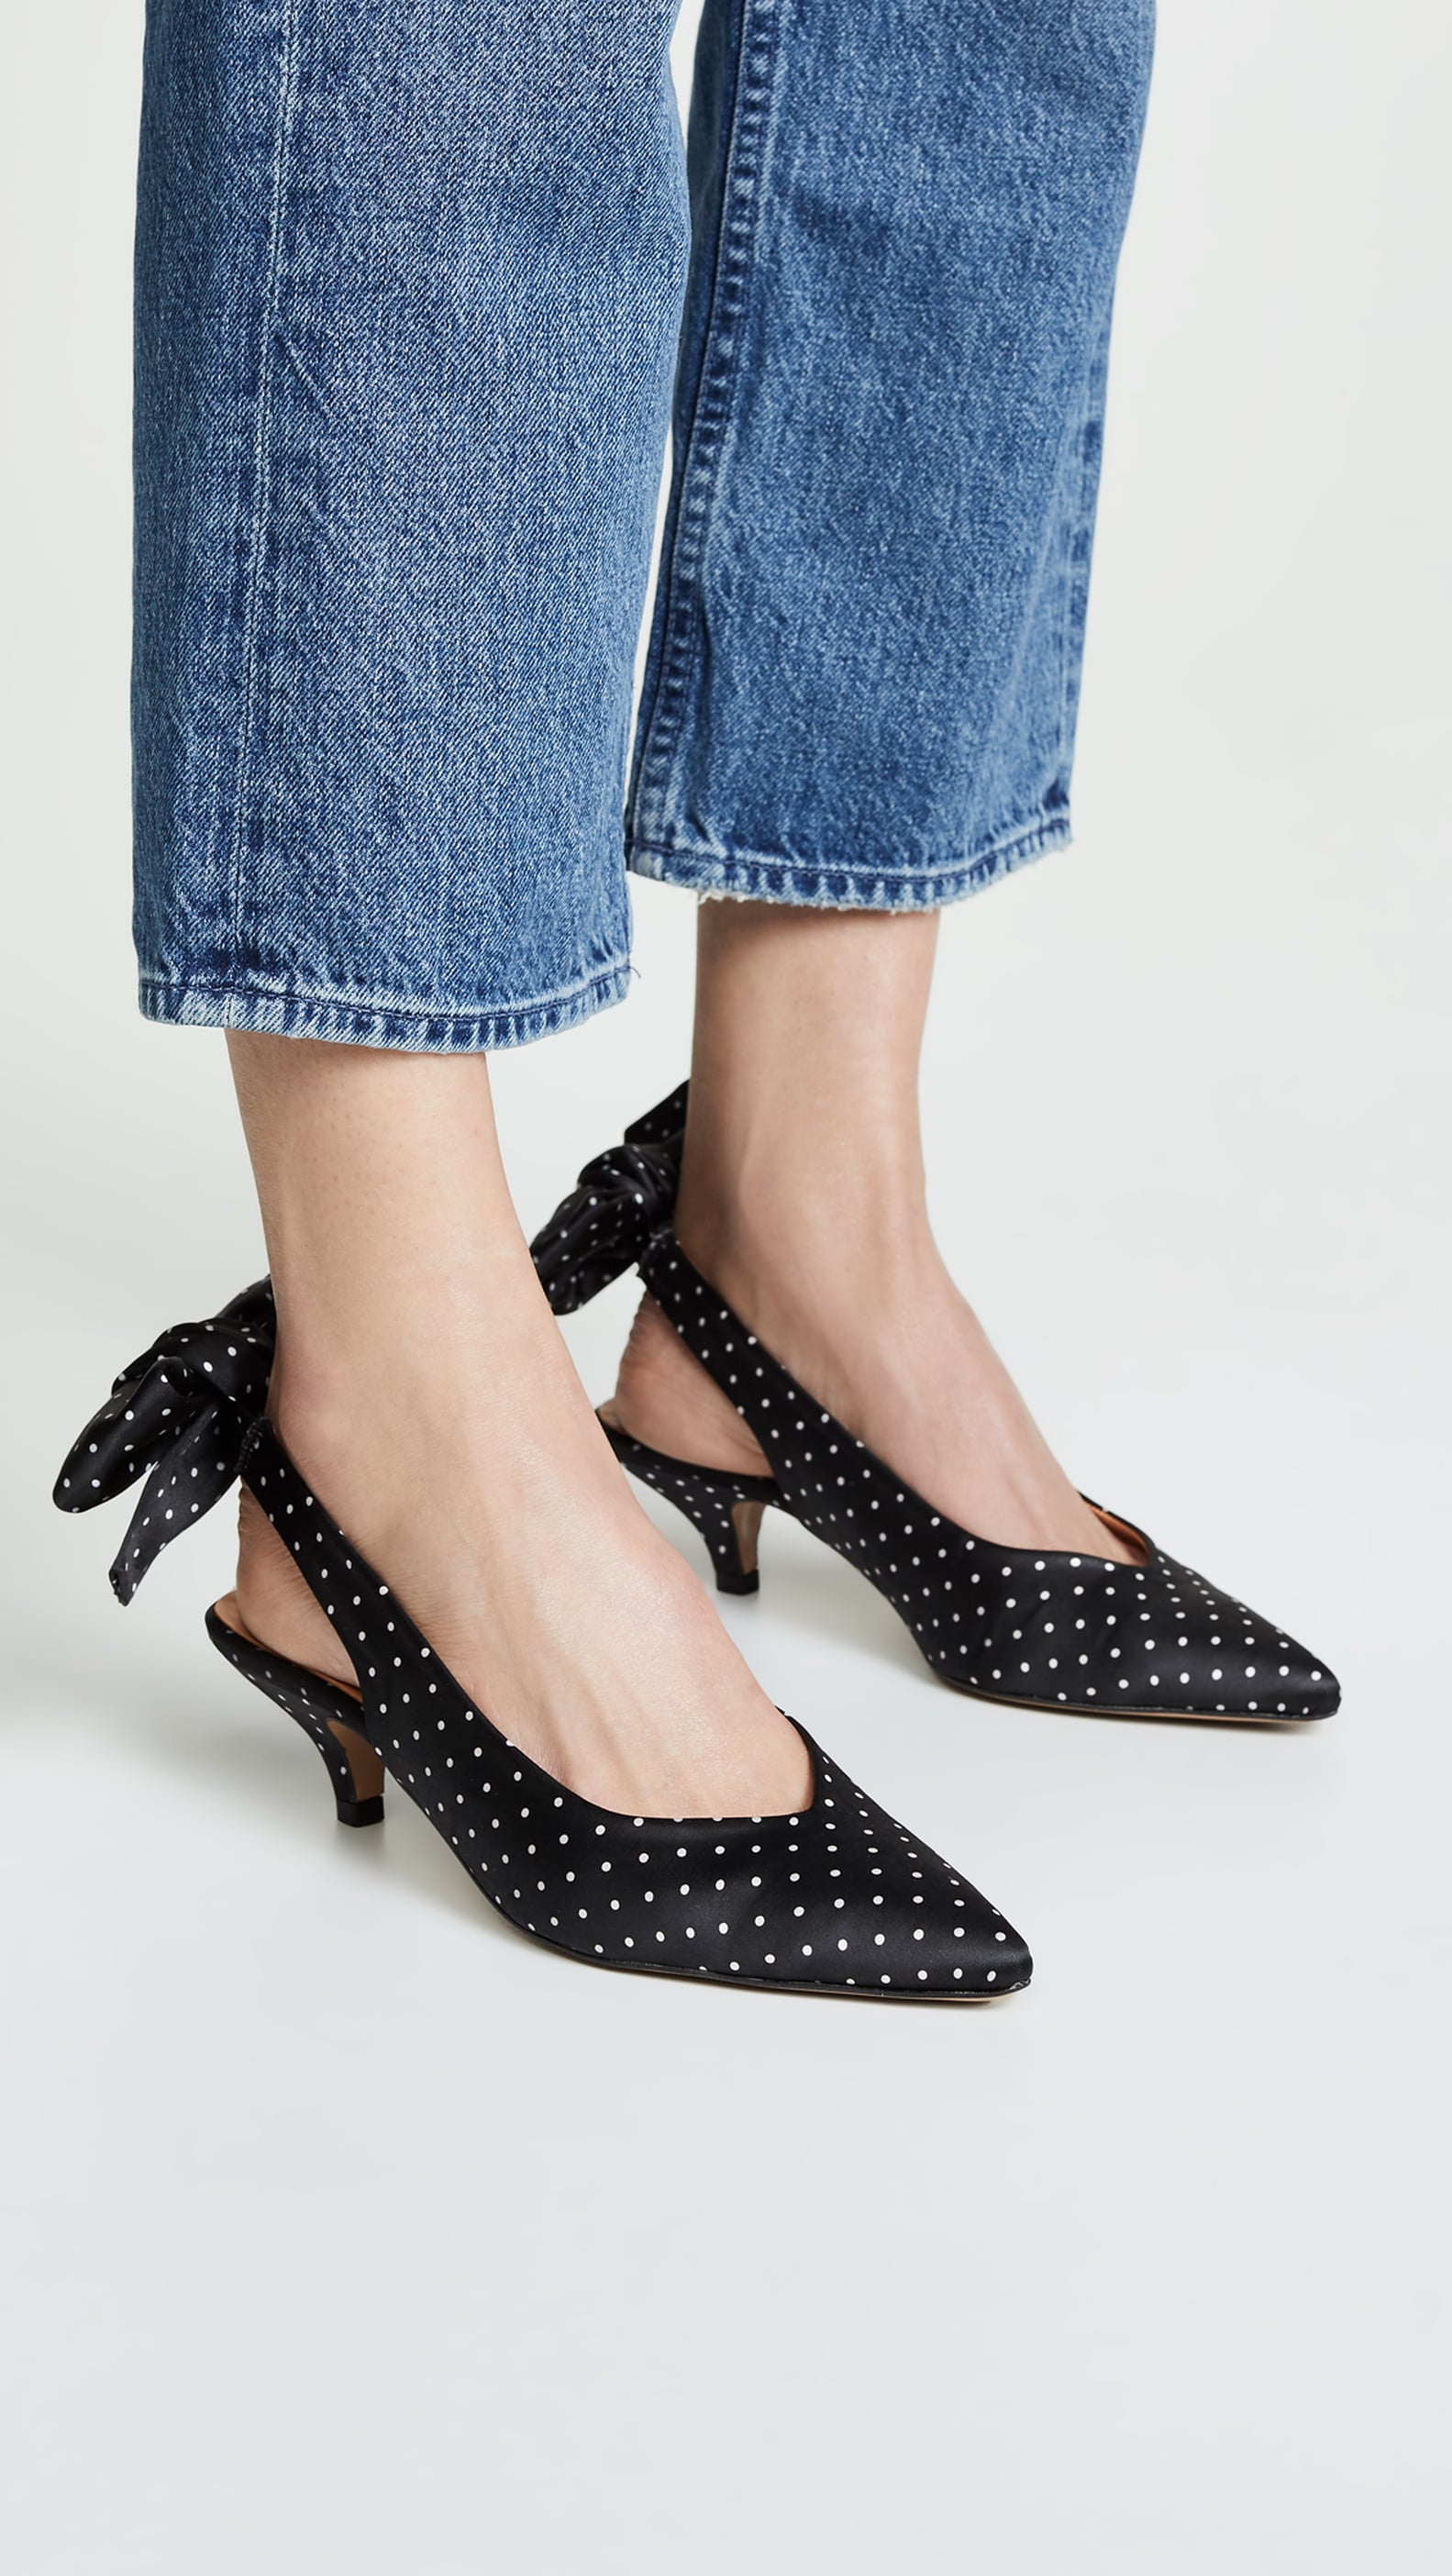 Comfortable Heels | POPSUGAR Fashion